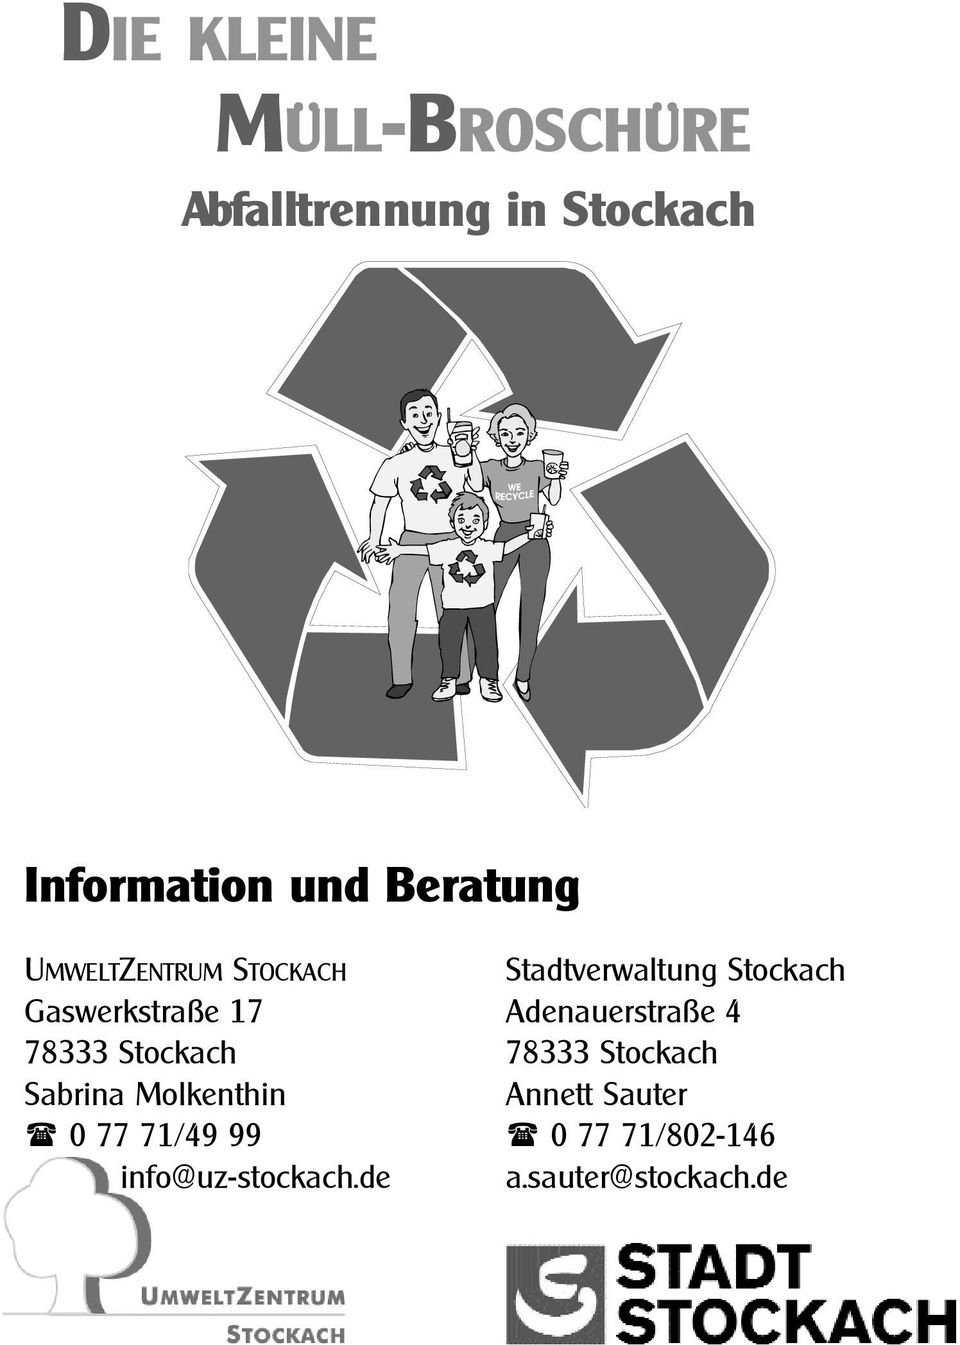 Adenauerstraße 4 78333 Stockach78333 Stockach Sabrina Molkenthin Annett